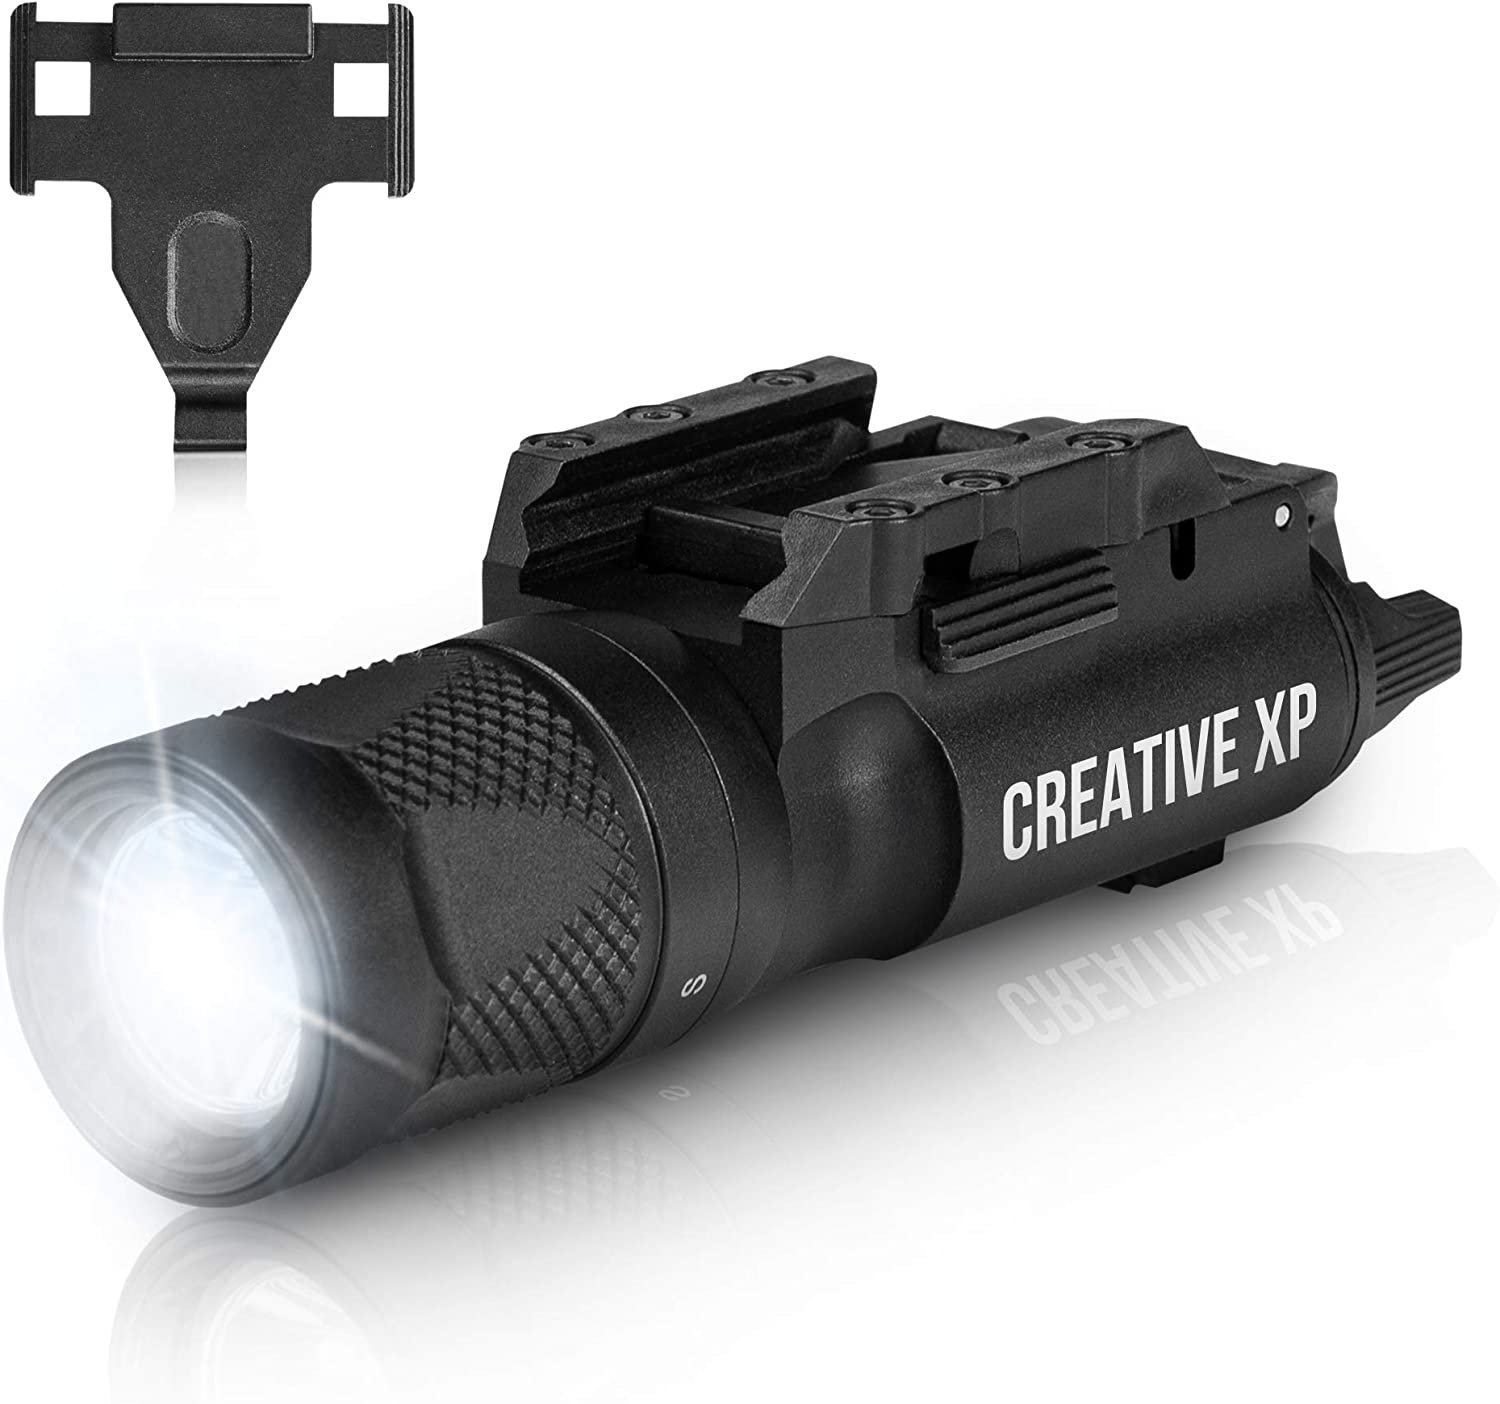 CREATIVE XP Pro Weapon Light 1000 Lumens with TIR Lens – LED Tactical Flashlight for Pistol, Handgun, AR & Long Guns – Rail Lock Mount, Strobe, Ambidextrous Switch & Batteries Included